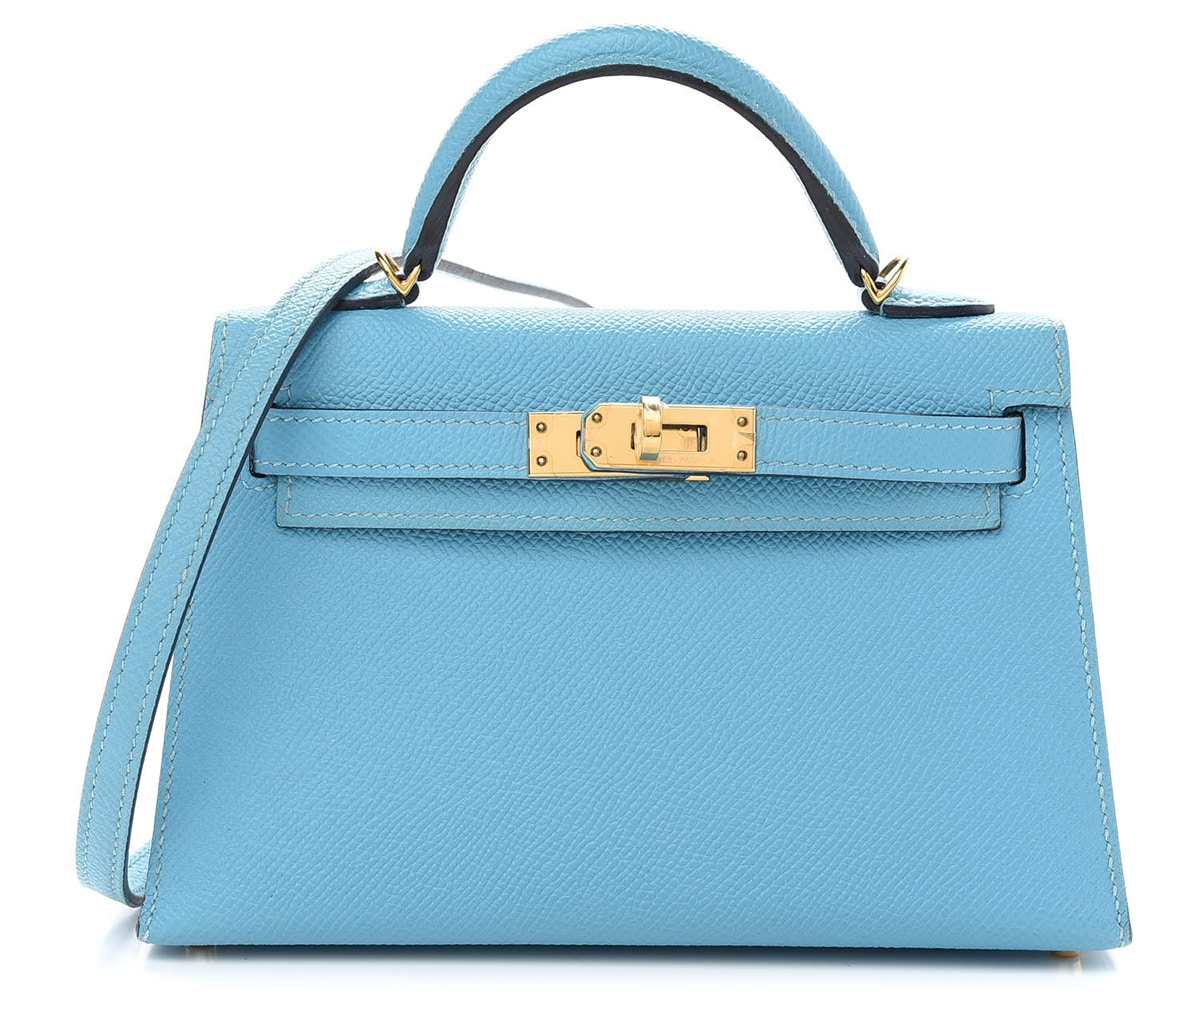 Handbag for “Her going out tonight” - Hermes Kelly Sellier 25 Bleu